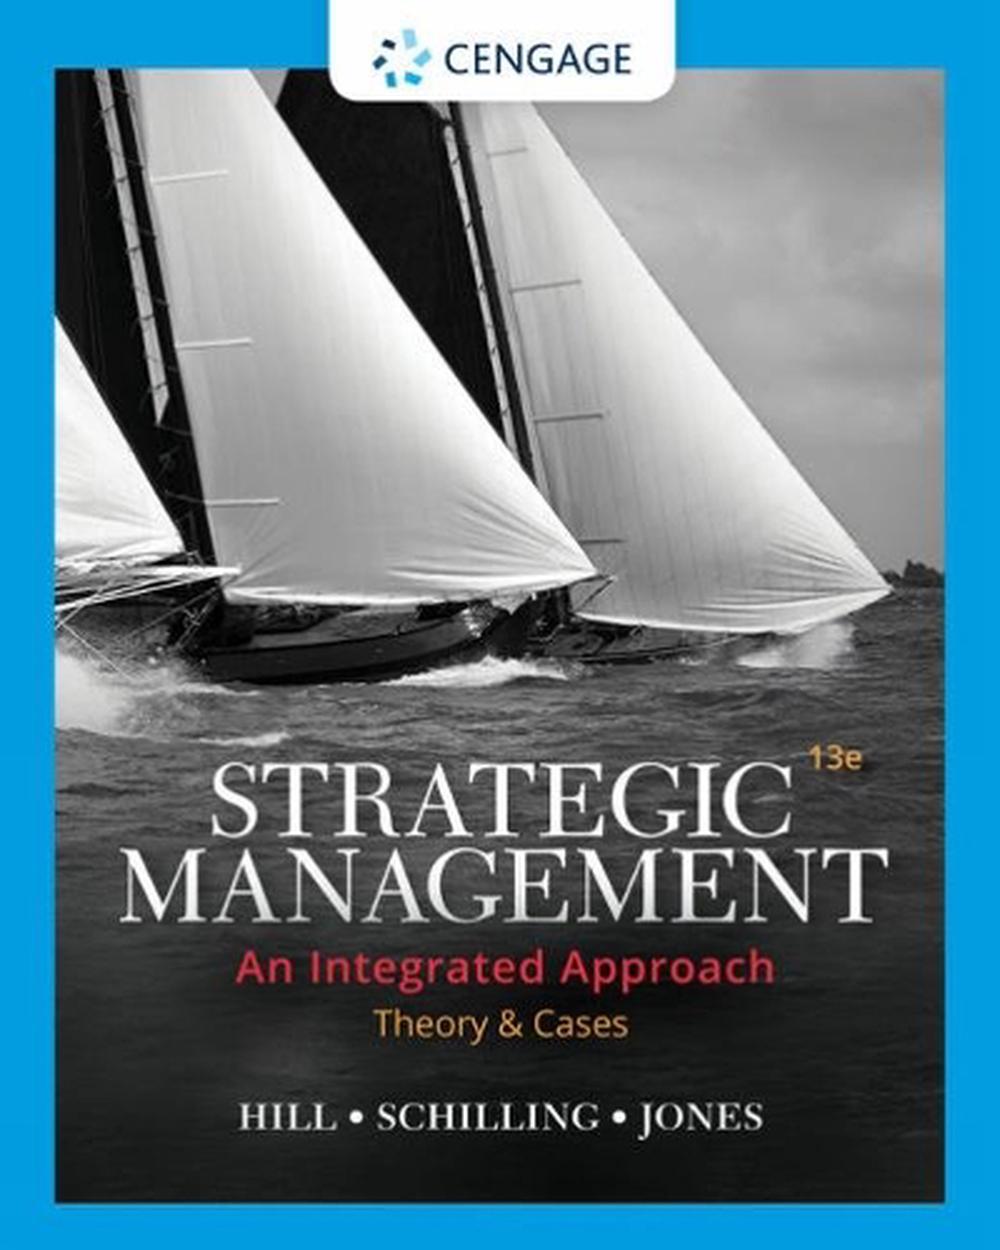 dissertation topic for strategic management